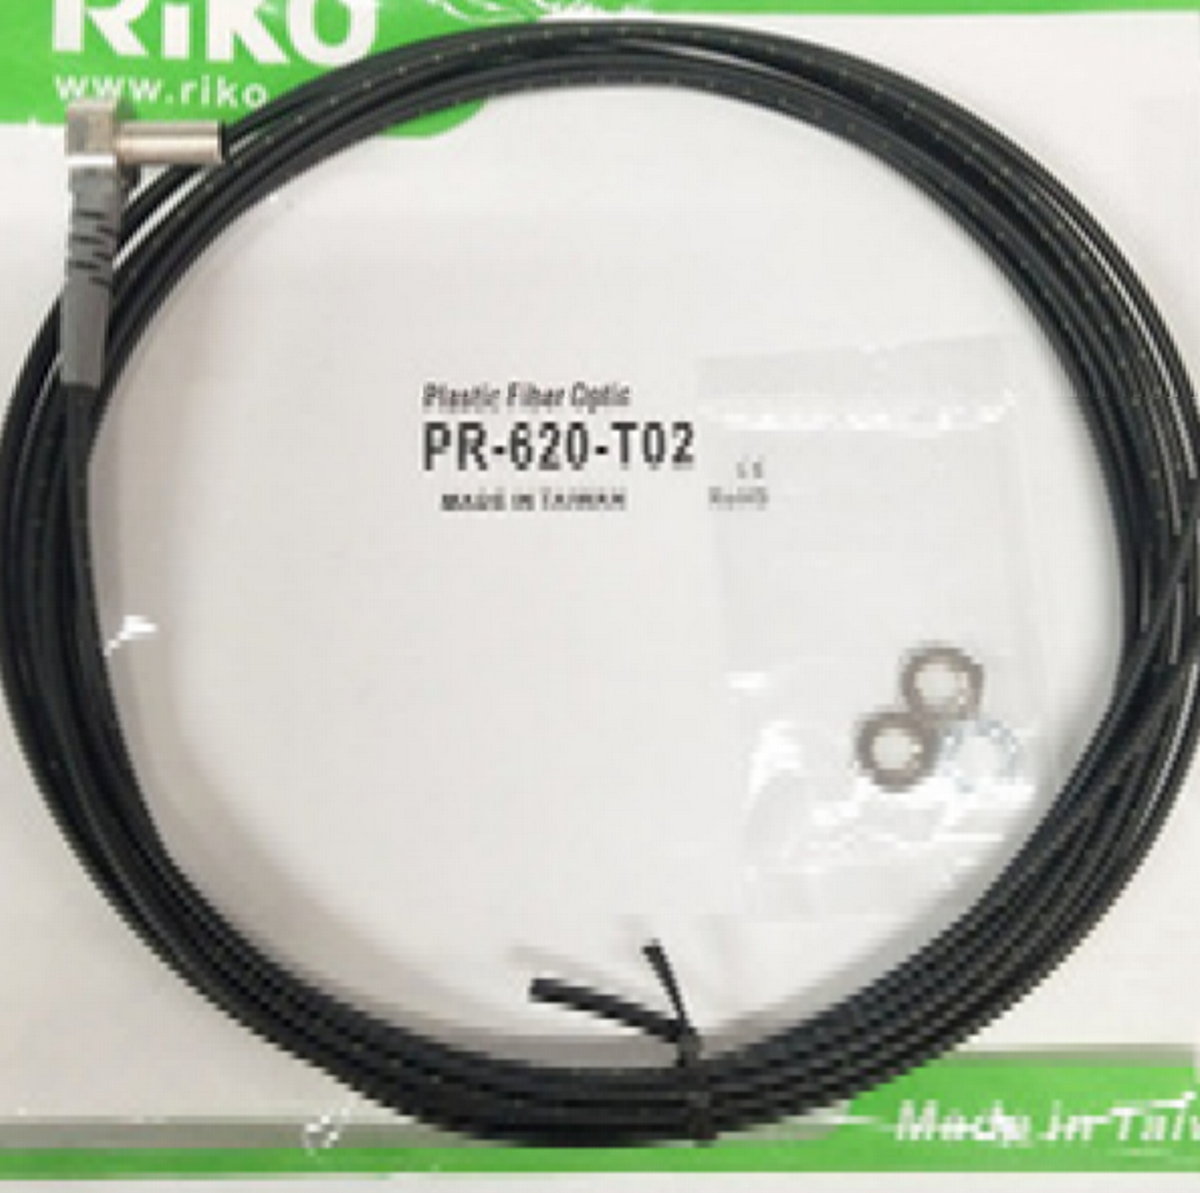 RIKO PR-620-T02 Reflective Right Angle L-Shaped Fiber